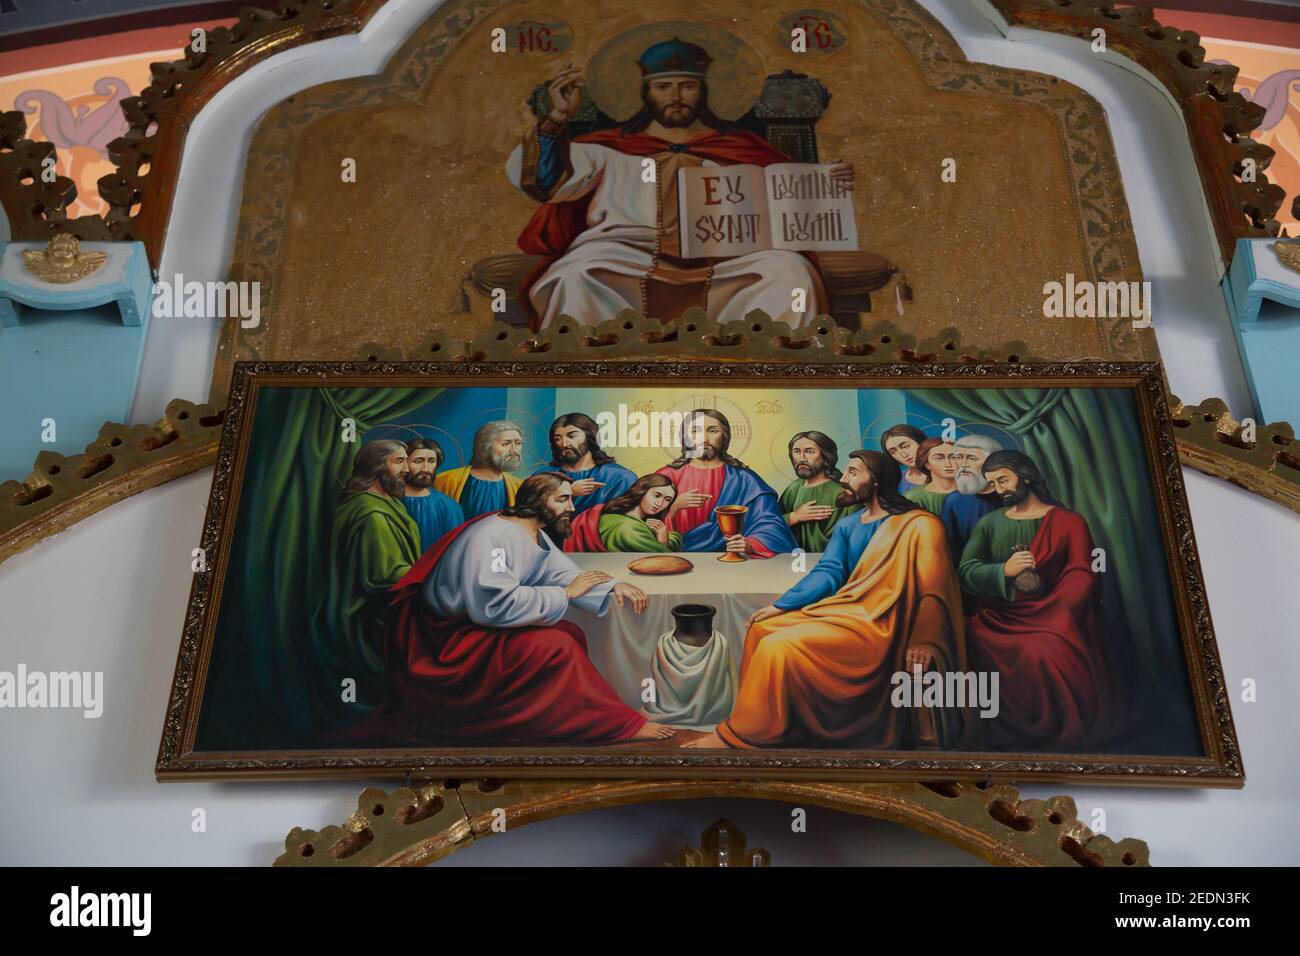 02.09.2016, Lalova, Rajon Rezina, Moldova - Painting depicting the Last Supper of Jesus, part of the iconostasis in the monastery church.. 00A160902D0 Stock Photo